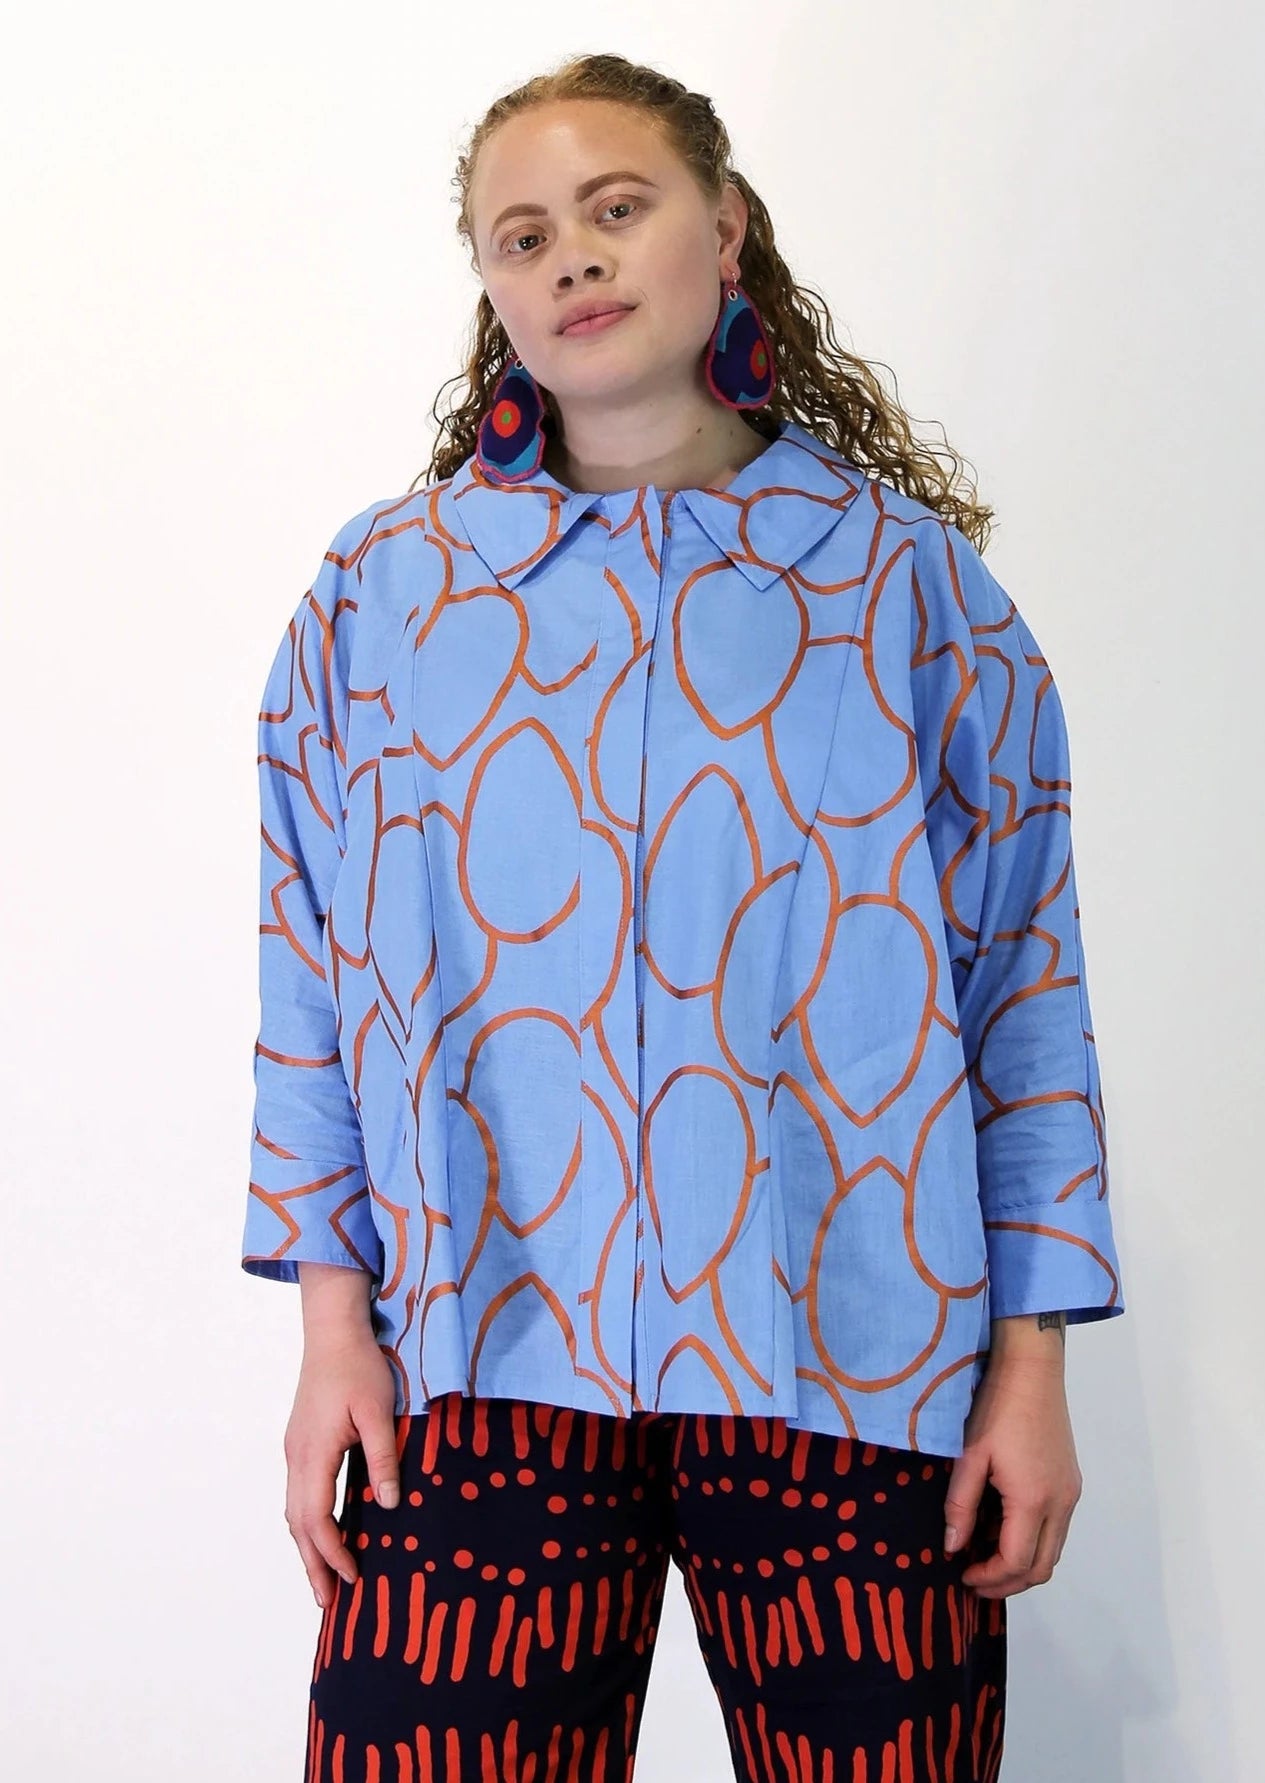 The Round-town Shirt in Bunya Bunya - Light Blue Textiles LORE 